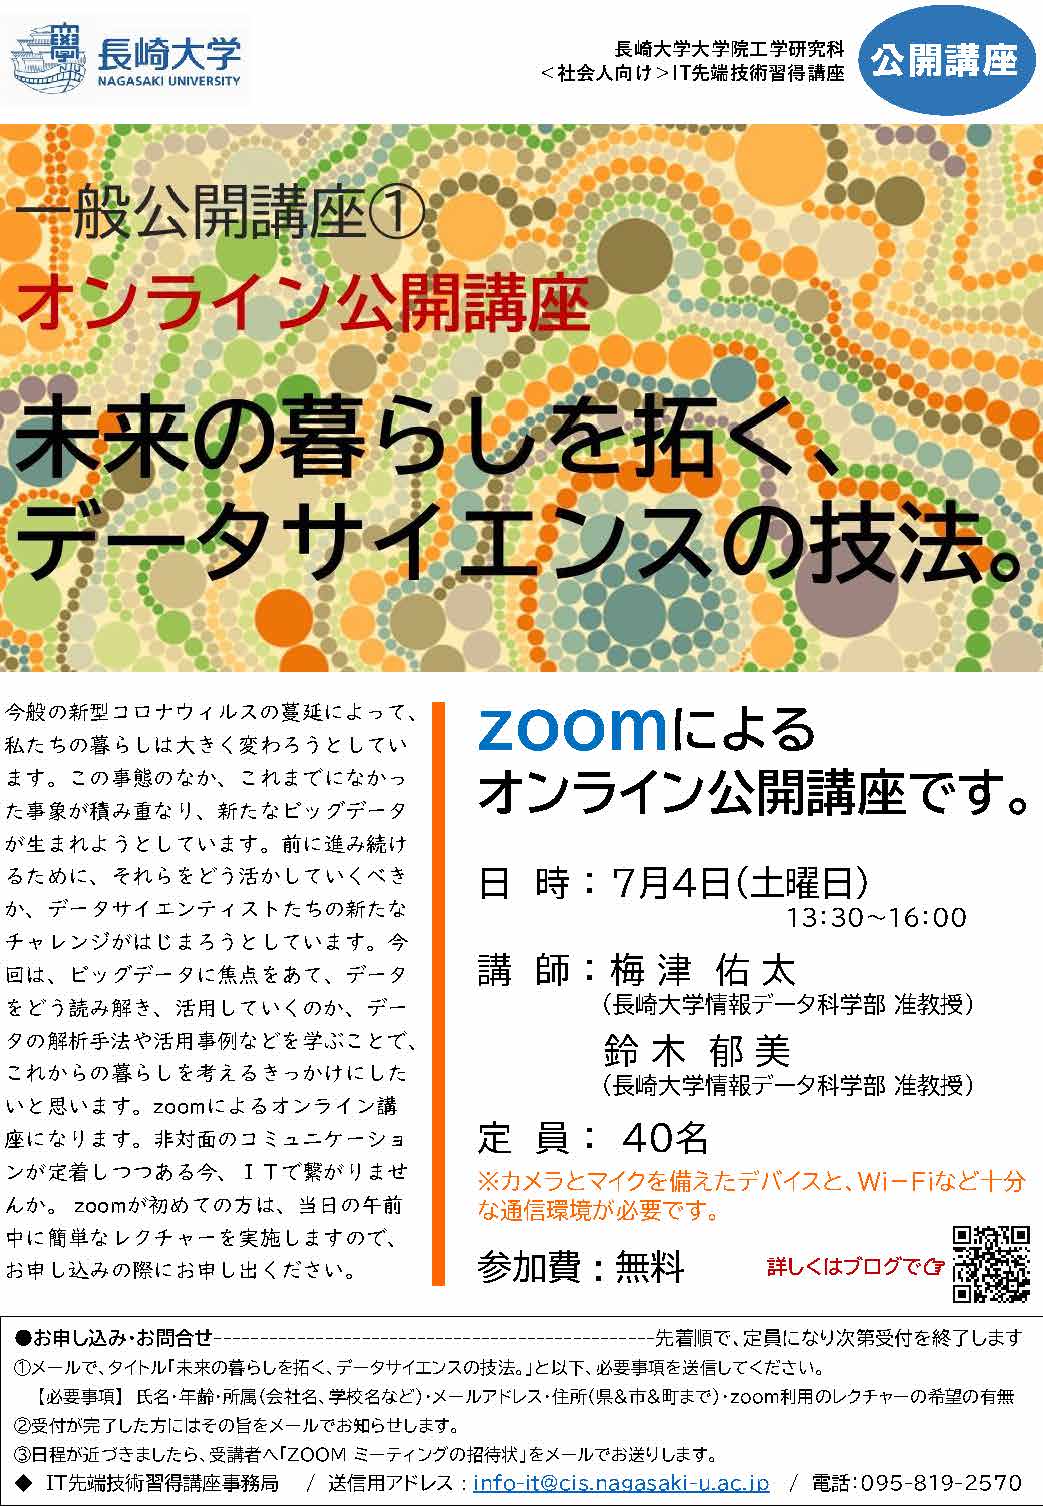 zoomオンライン講座「未来の暮らしを拓く、データサイエンスの技法」